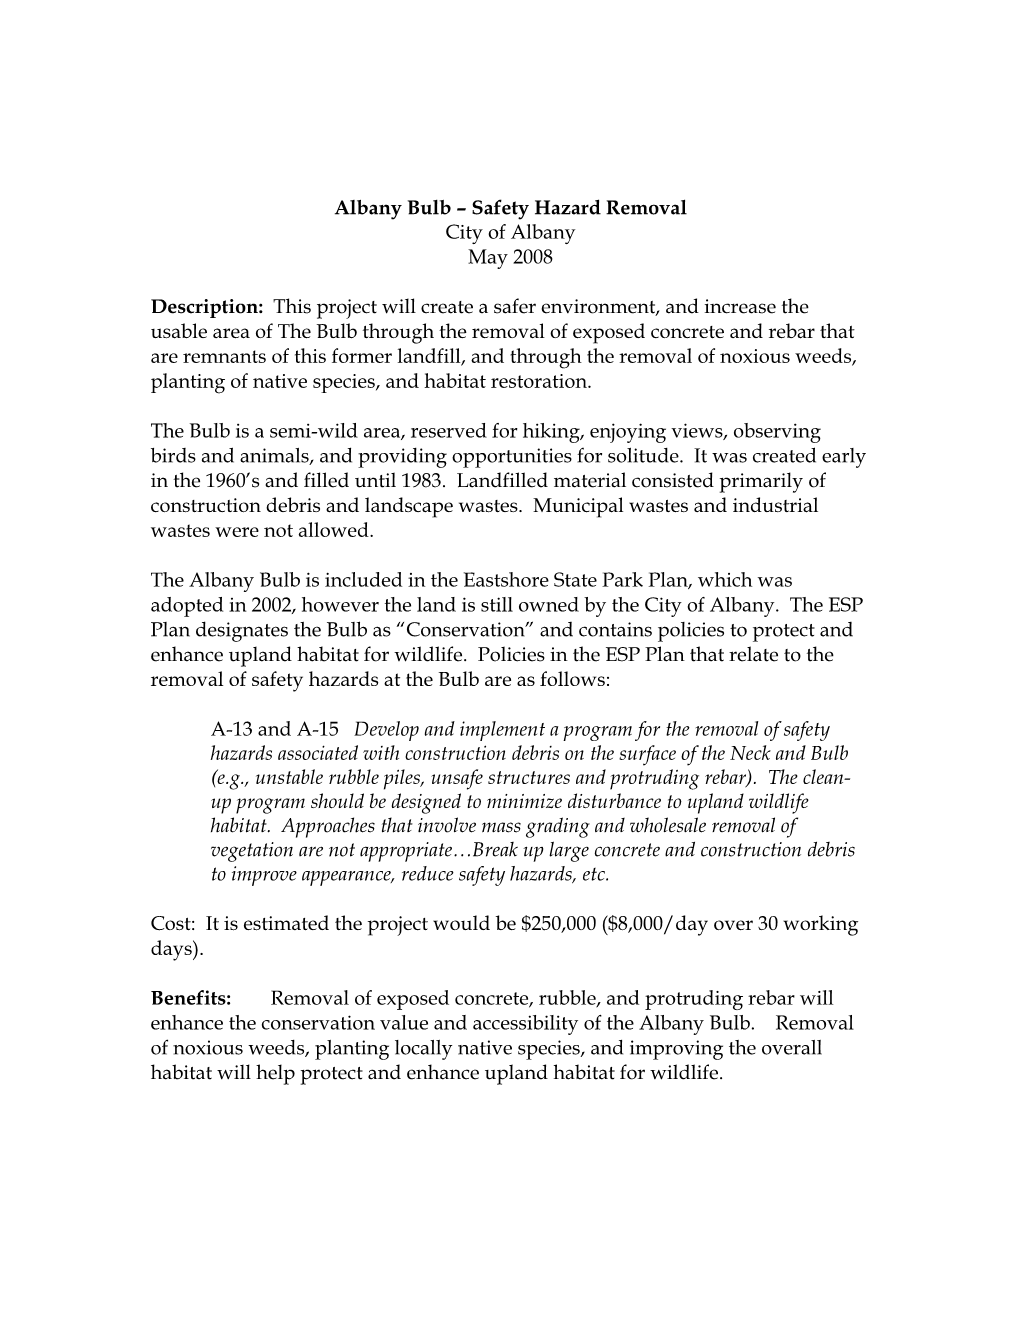 Albany Bulb – Safety Hazard Removal City of Albany May 2008